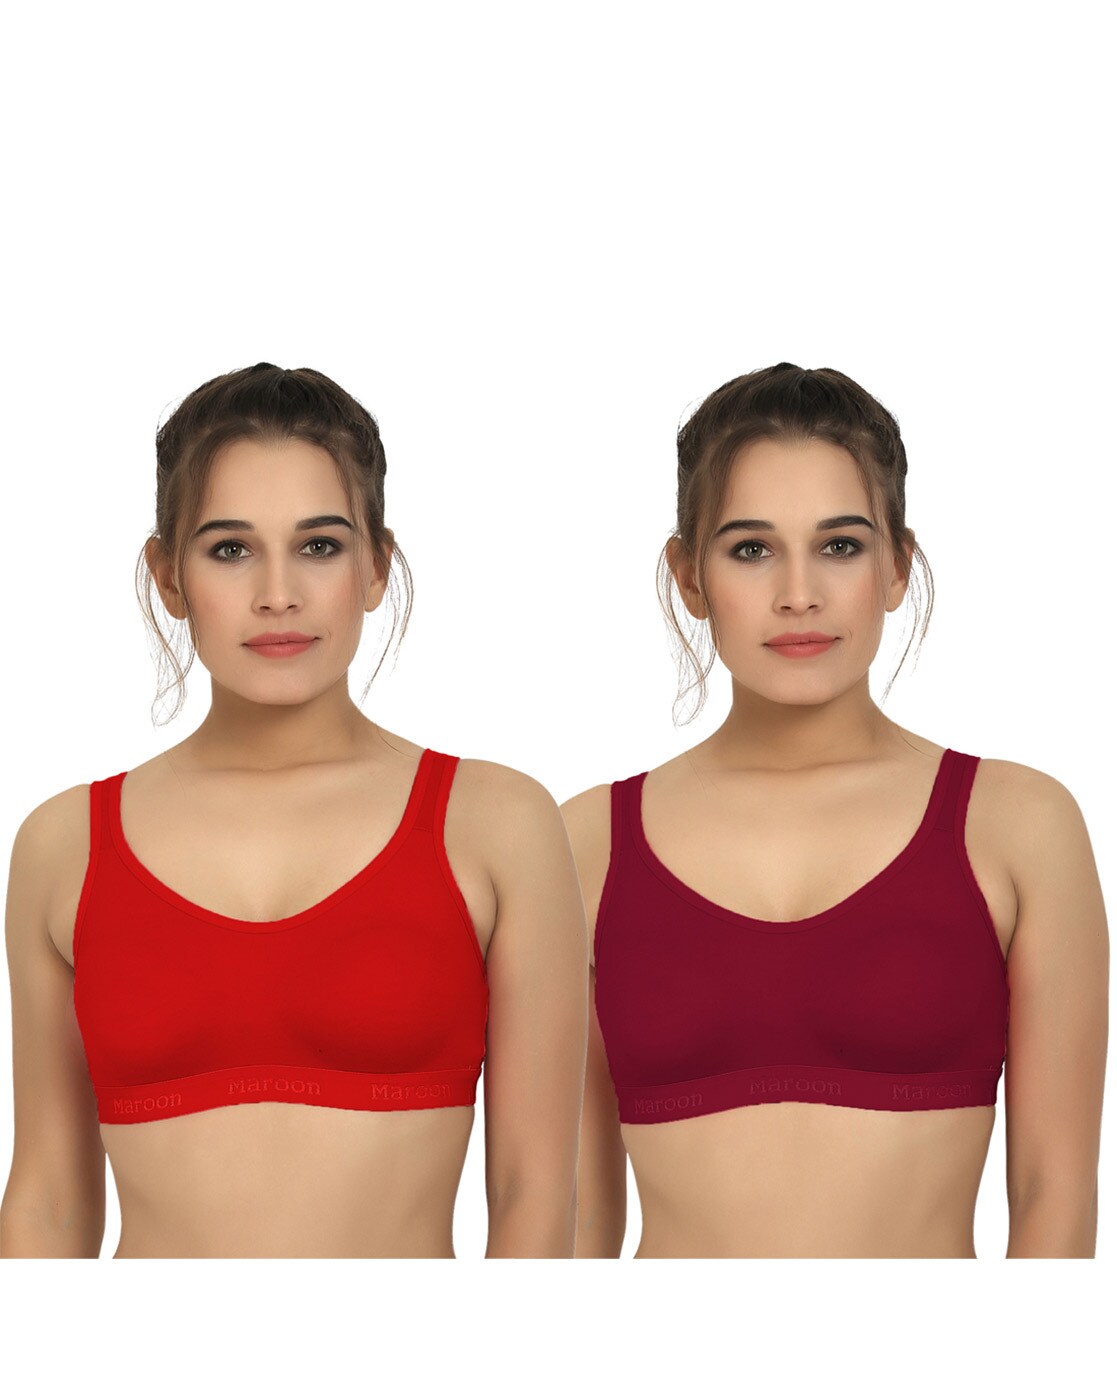 LooksOMG Cotton Lycra Sports bra in Maroon & Skin Color Pack of 2